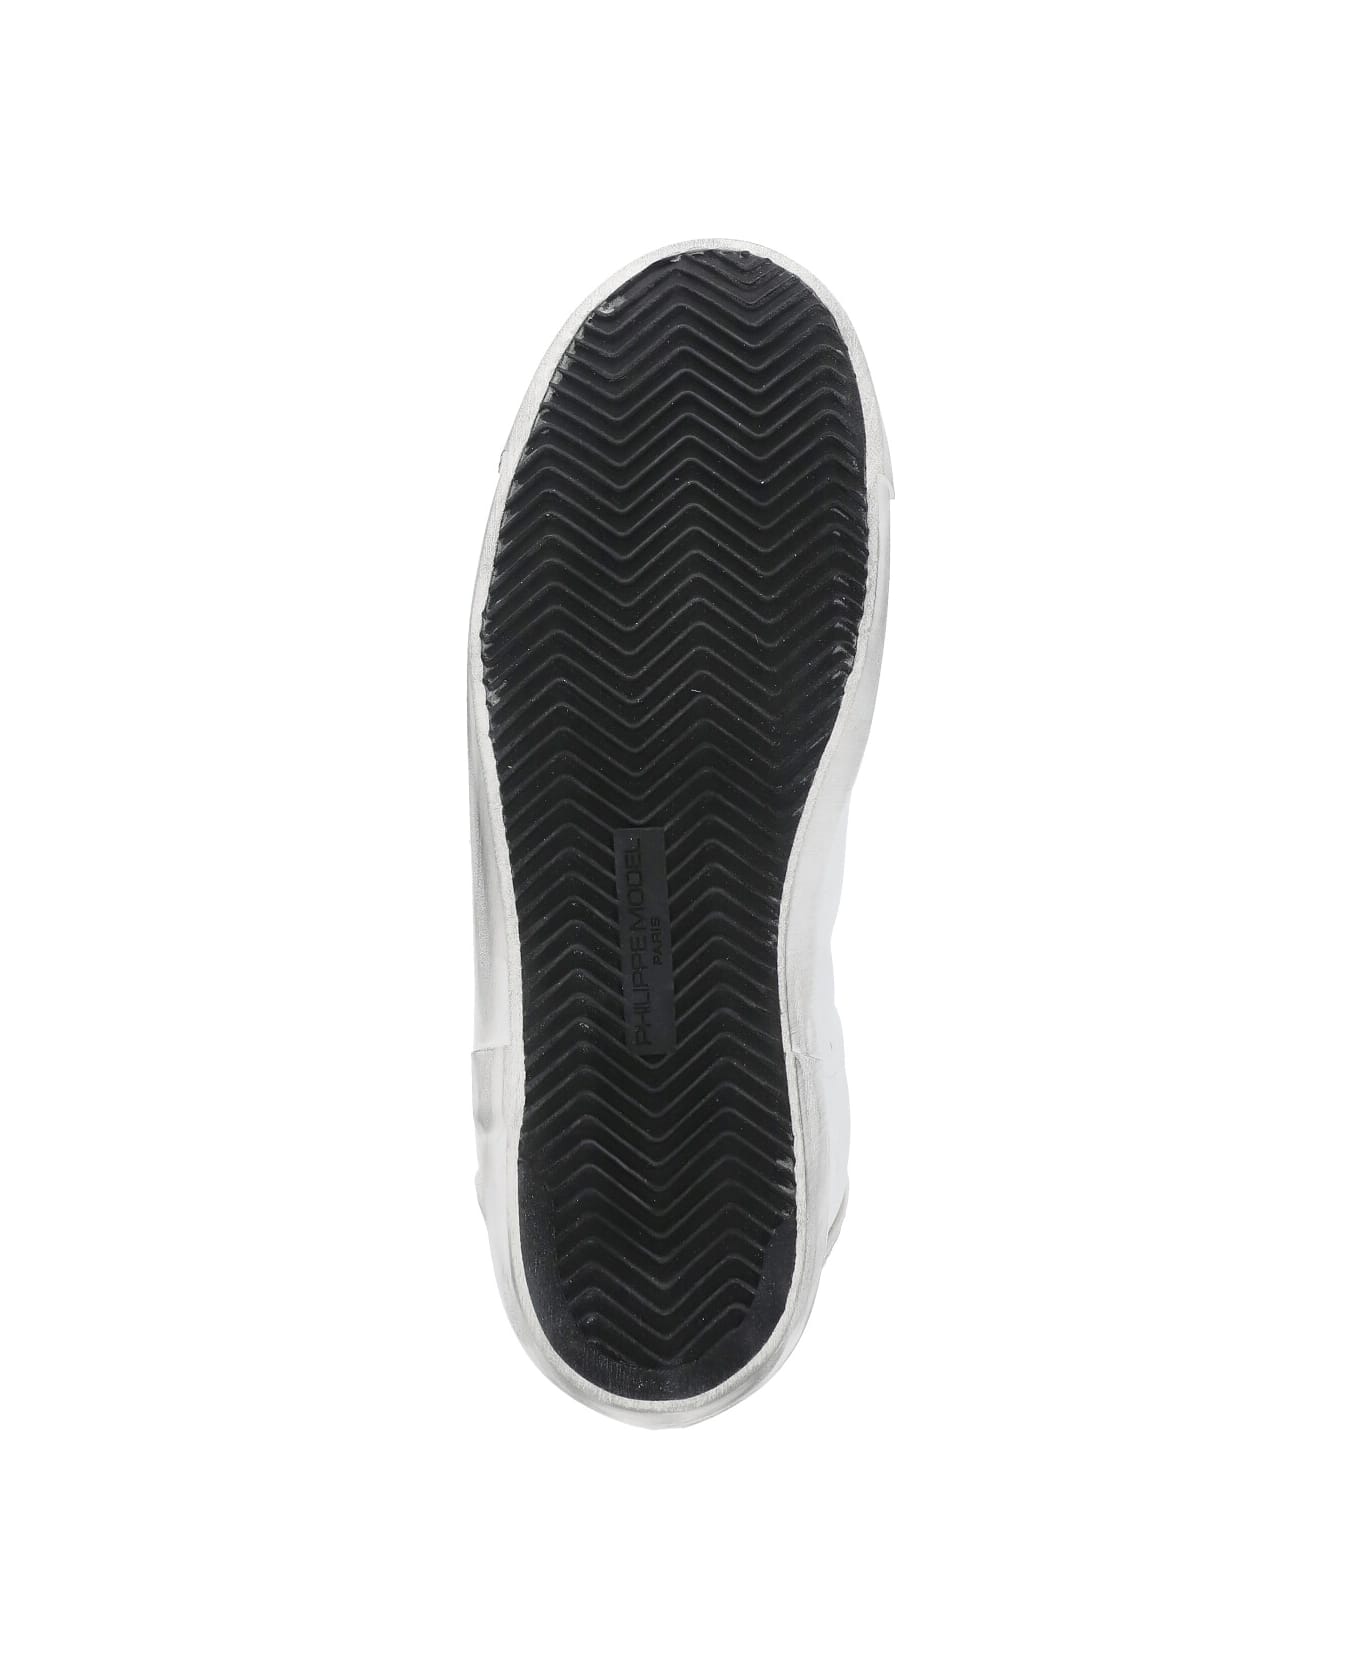 Philippe Model Prsx Basic Sneakers - White スニーカー